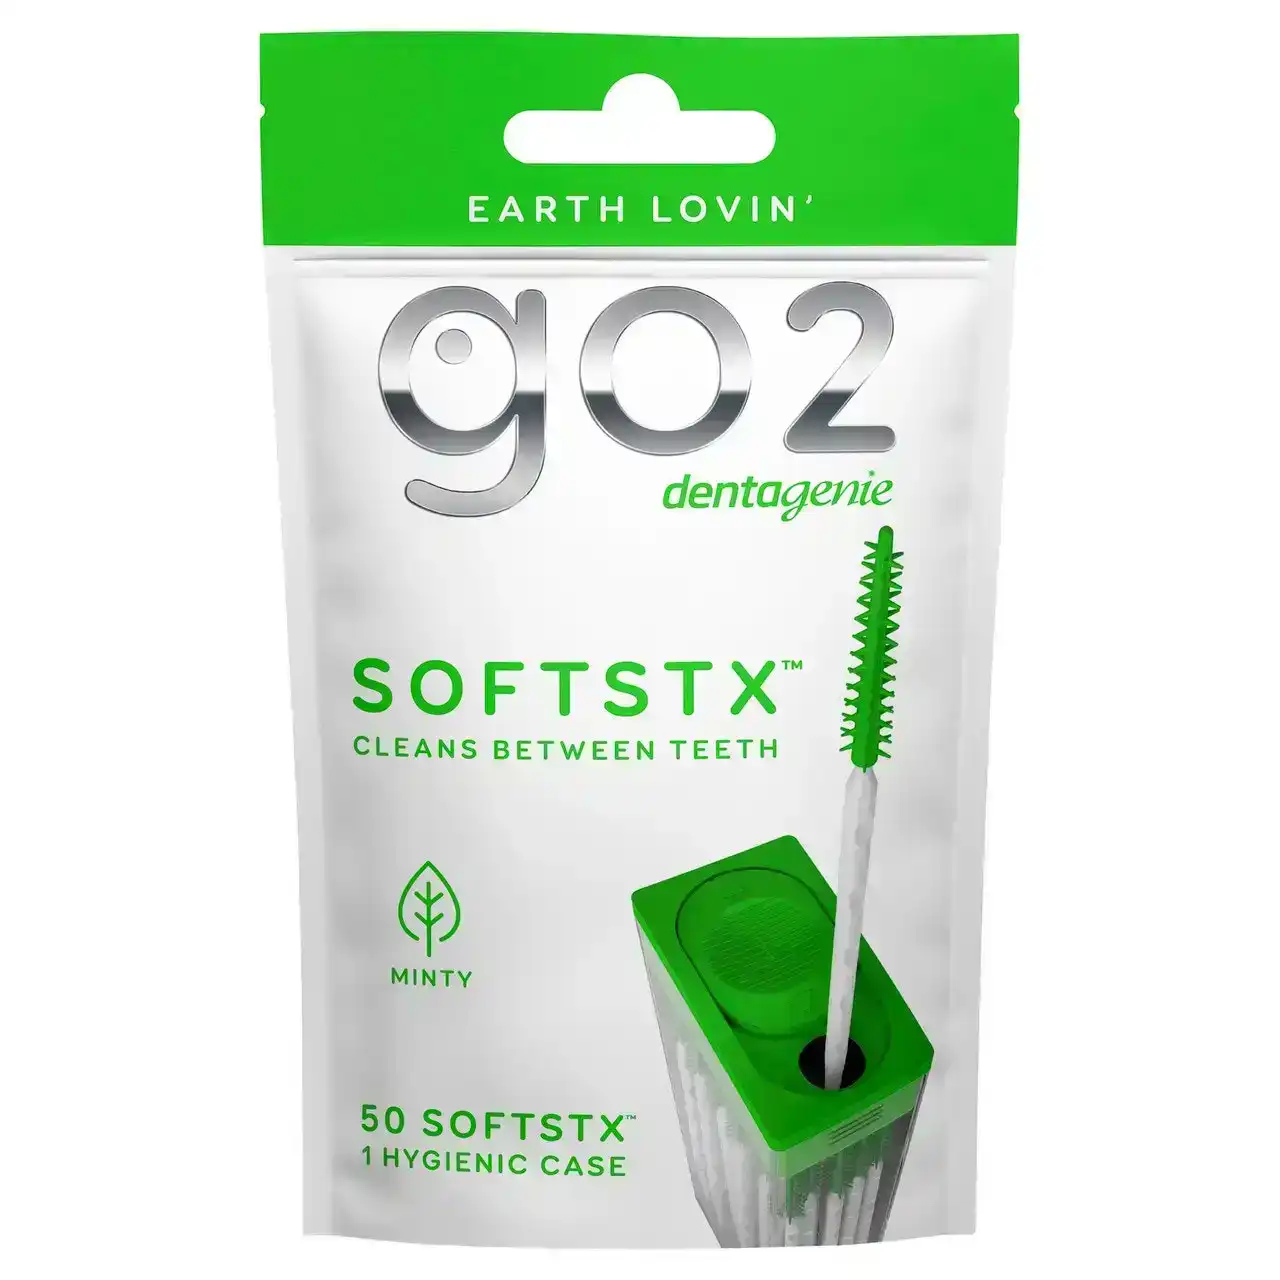 GO2 Dentagenie Softstx - Cleans between Teeth